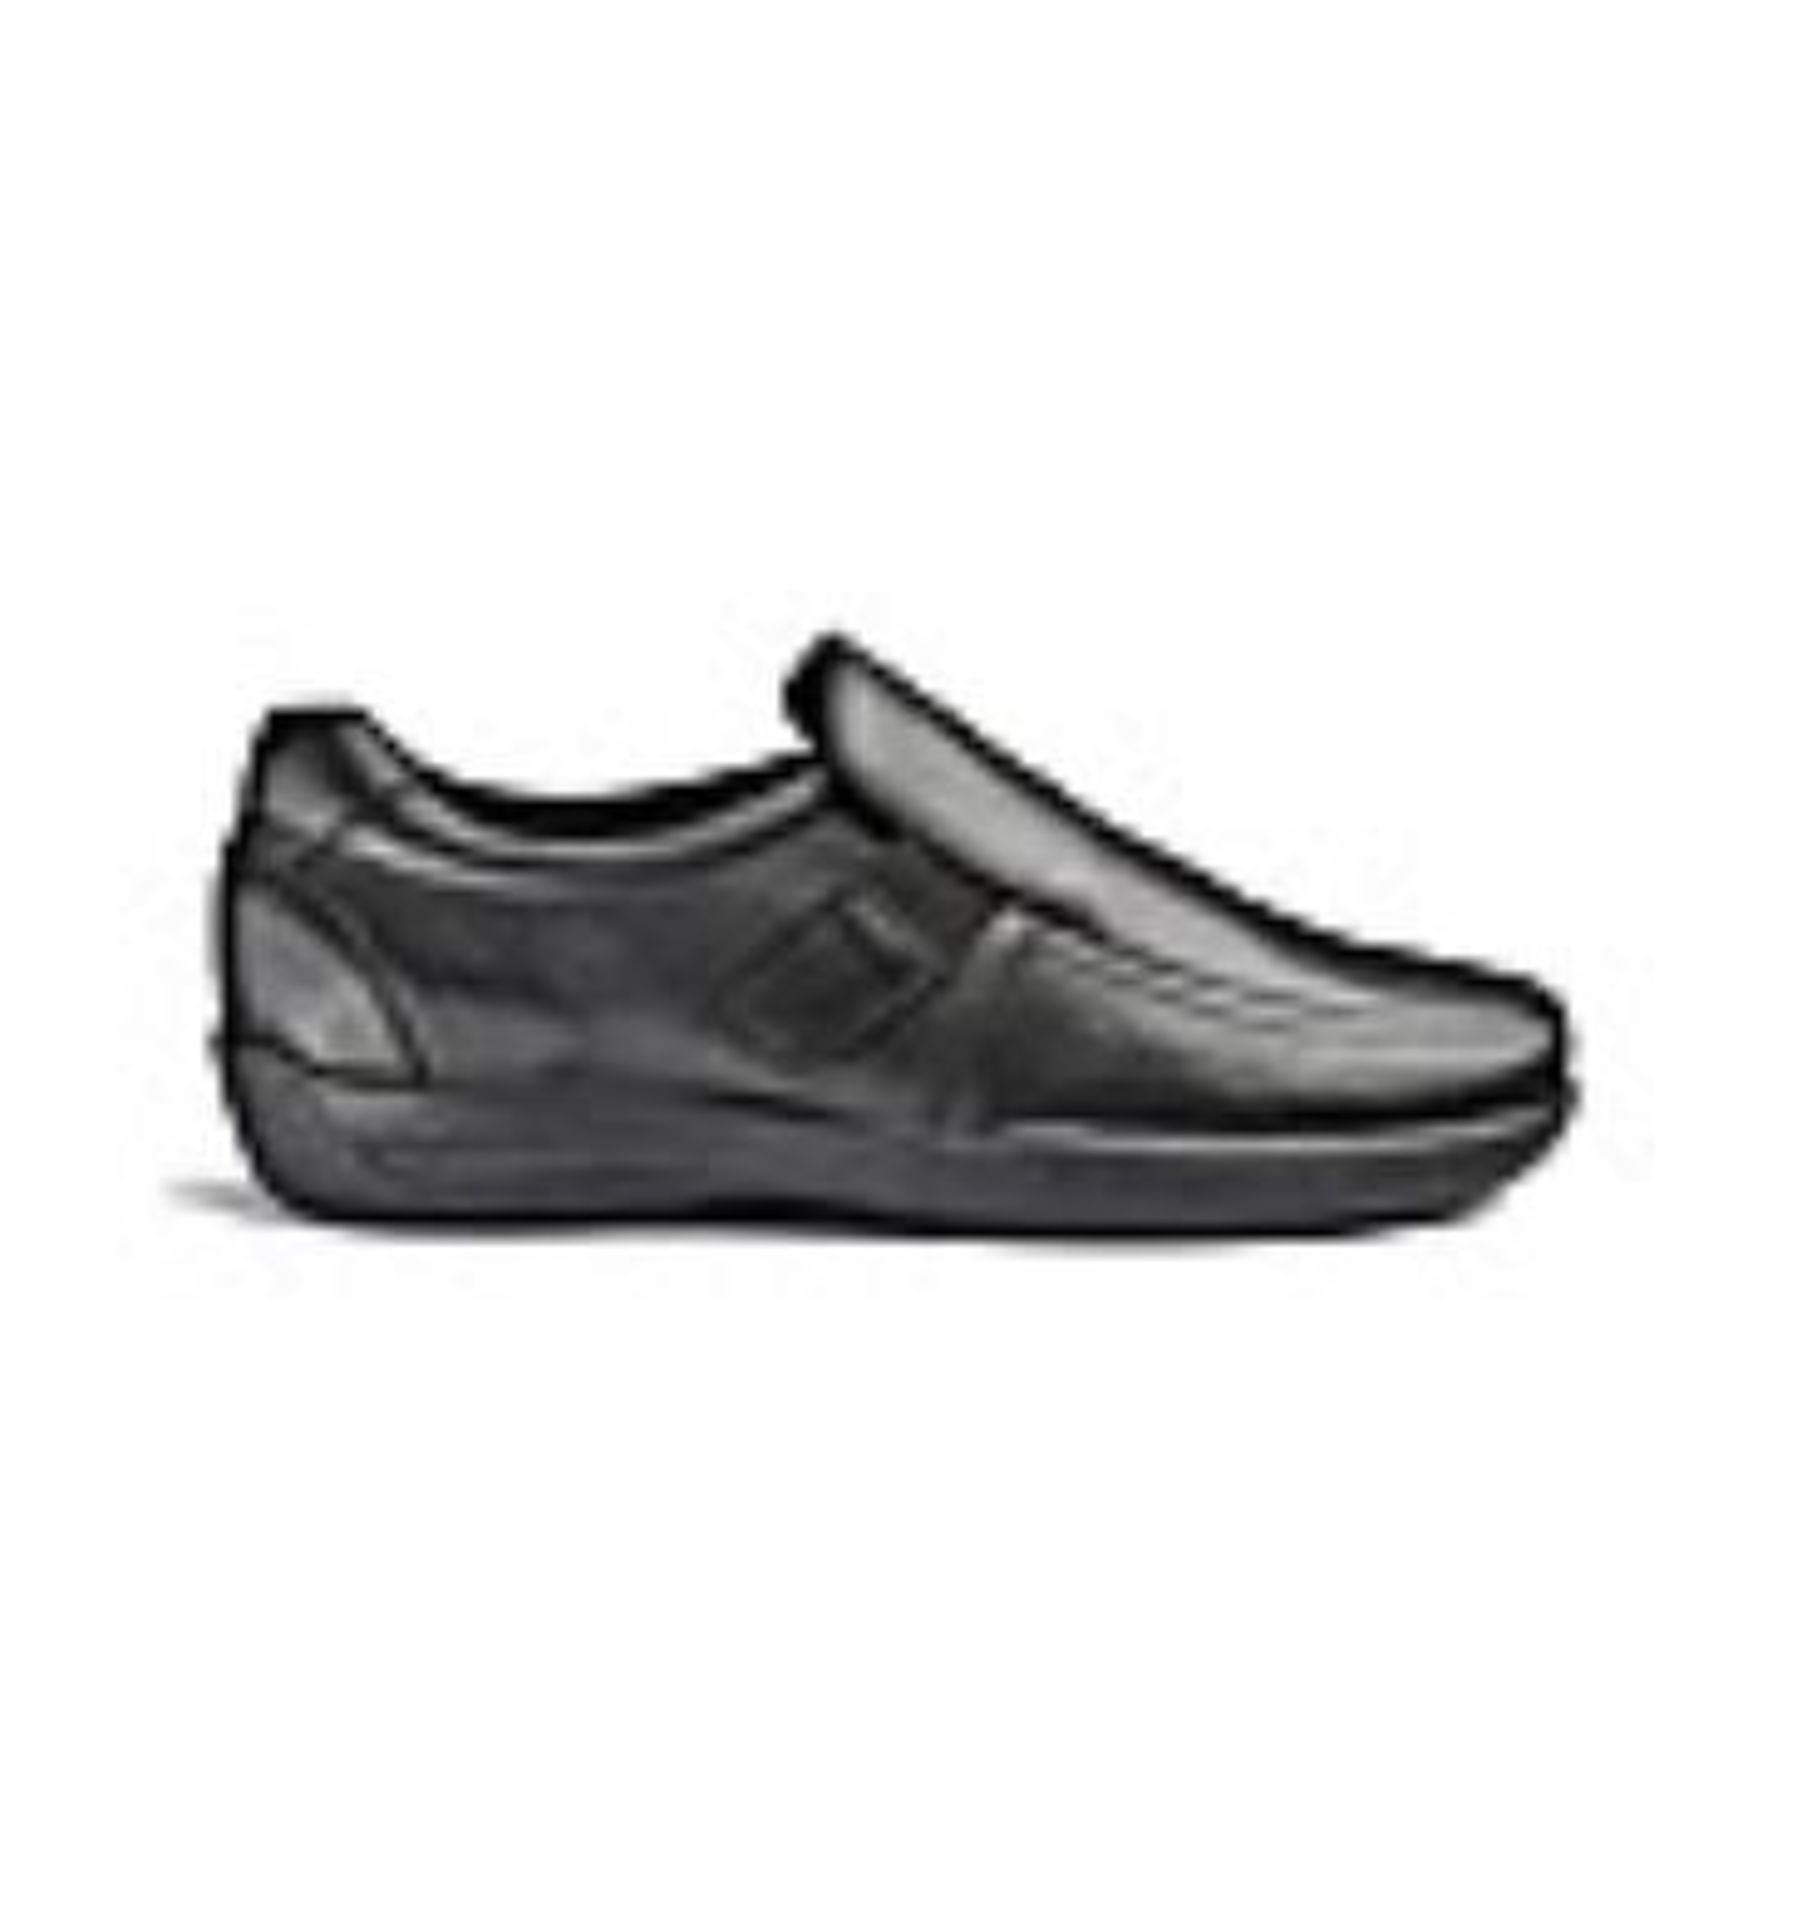 + VAT Brand New Pair Gents Black Flex Elastic Slip on Shoes Size 7